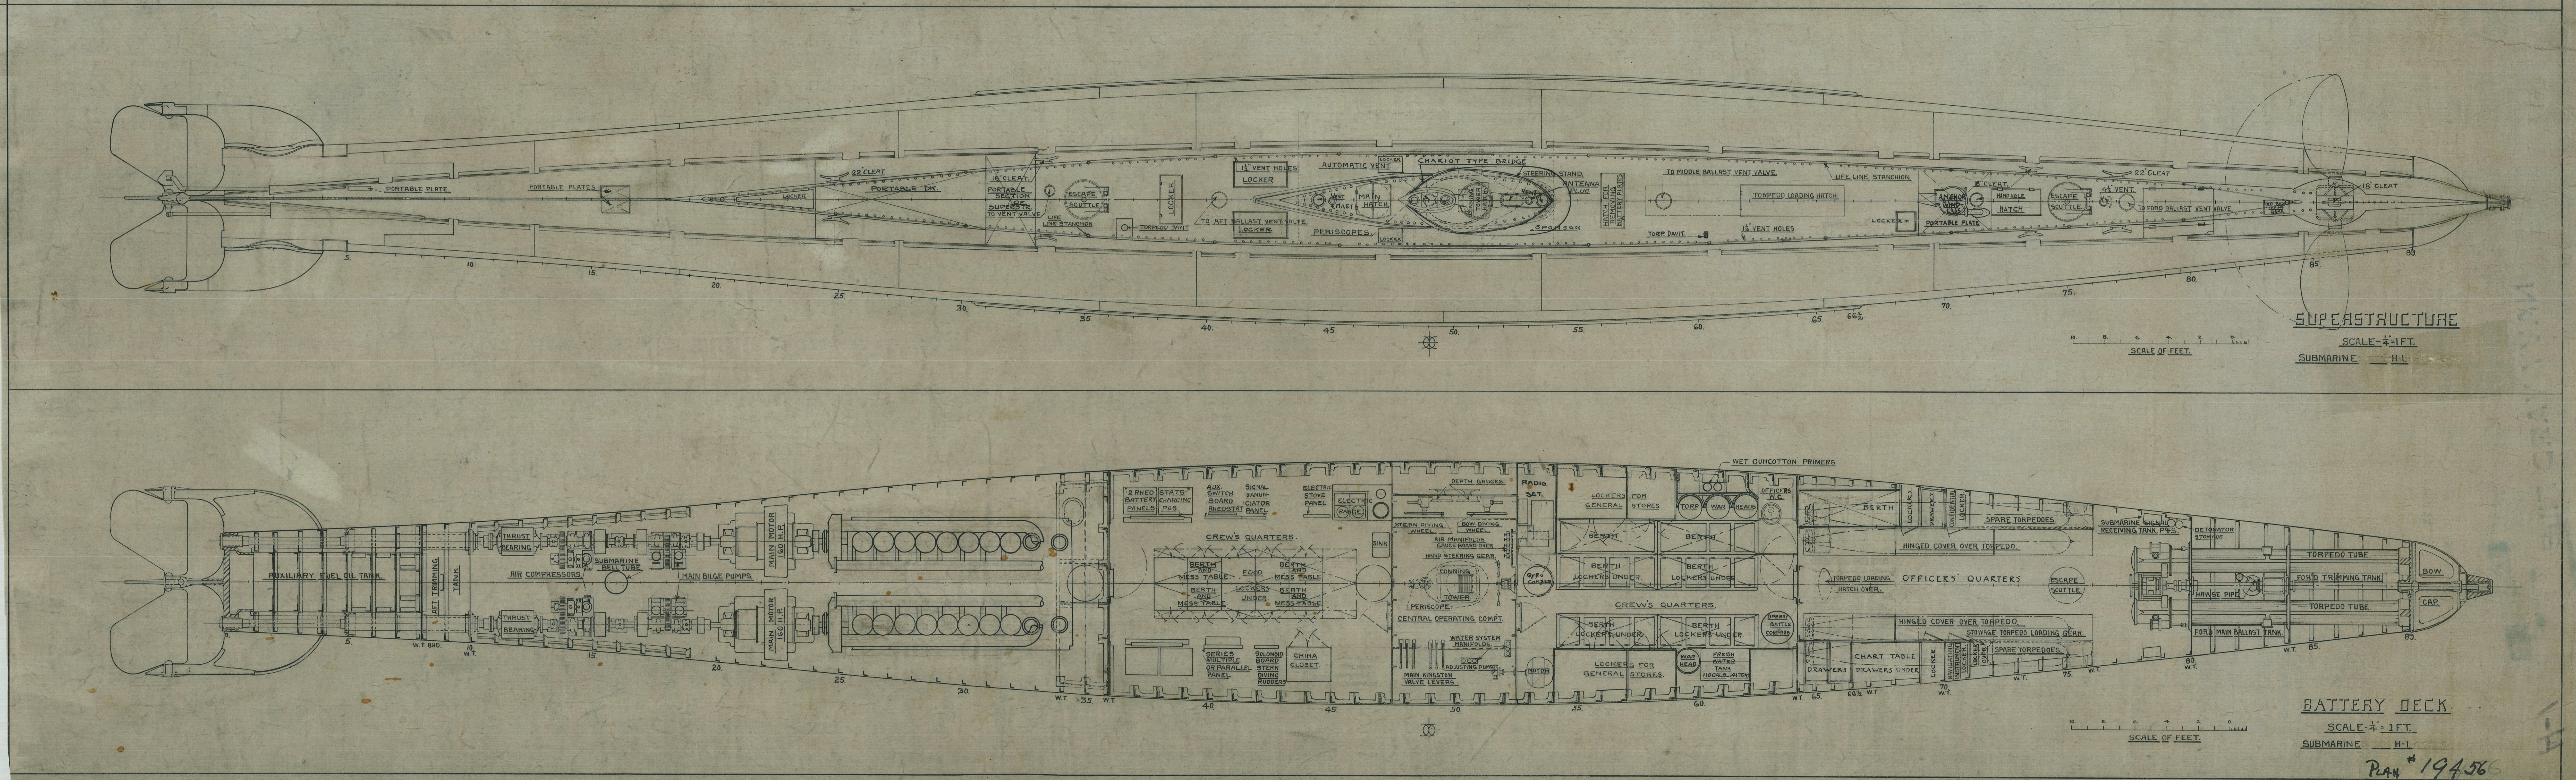 Philadelphia Navy Yard plans via Internet Archive